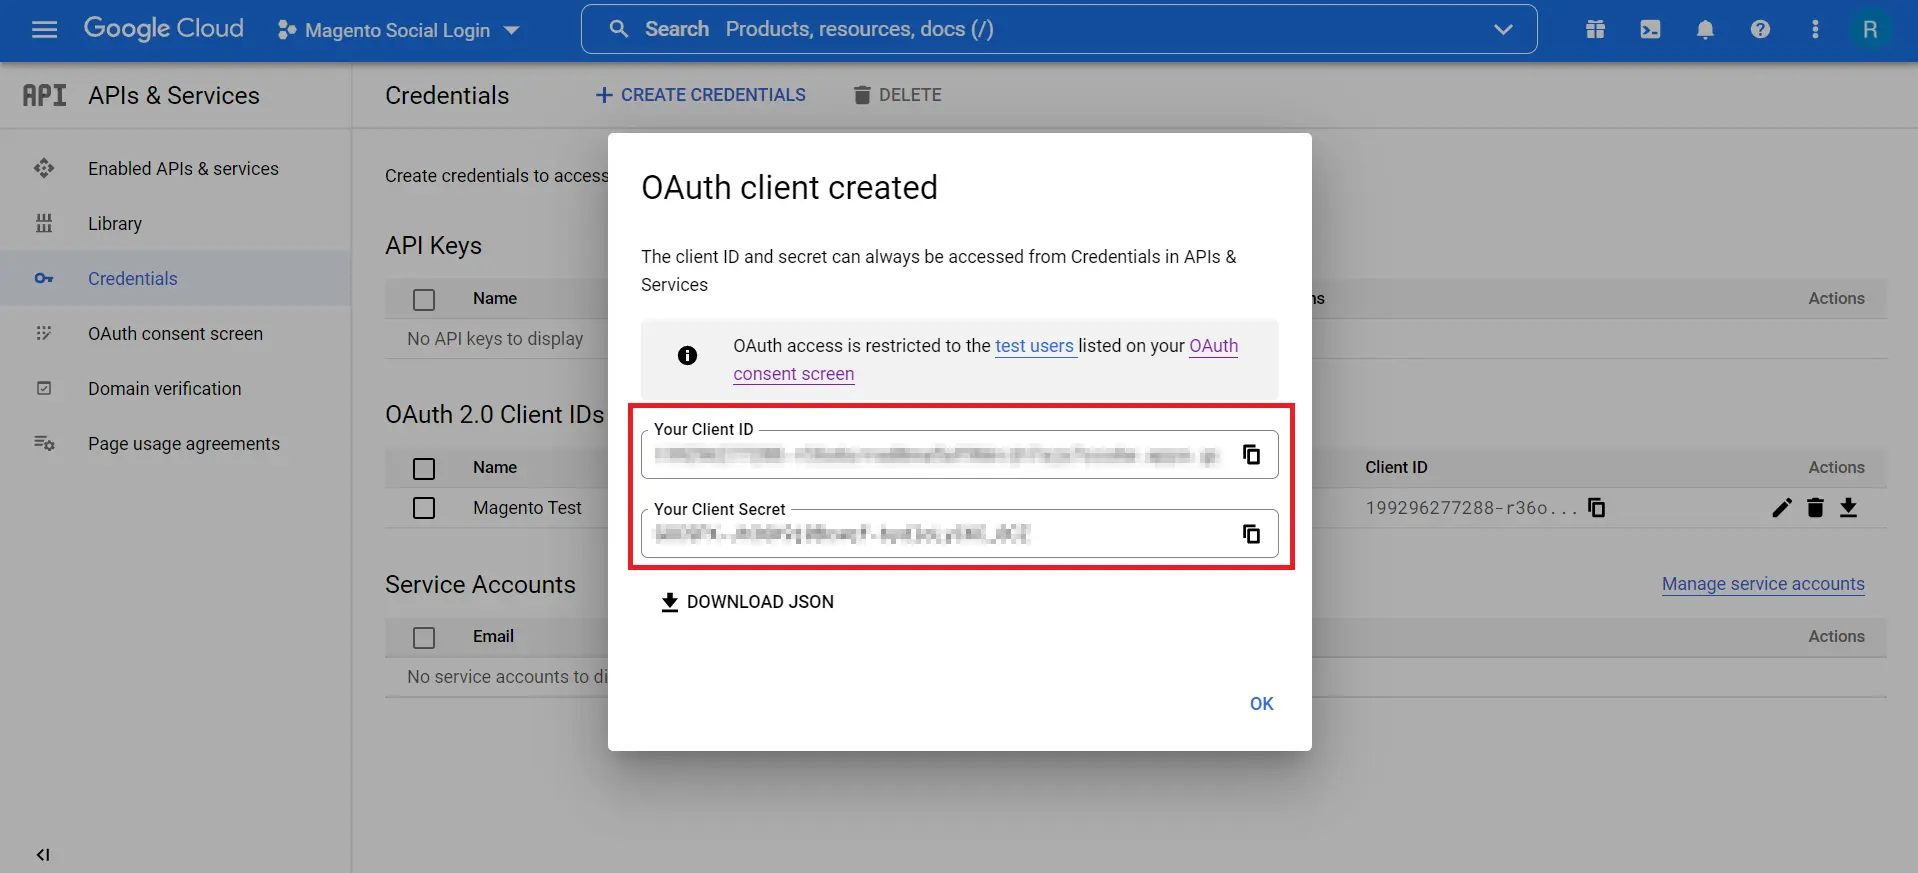 Google app client id and client secret for Magento social login | Magento 2 google login